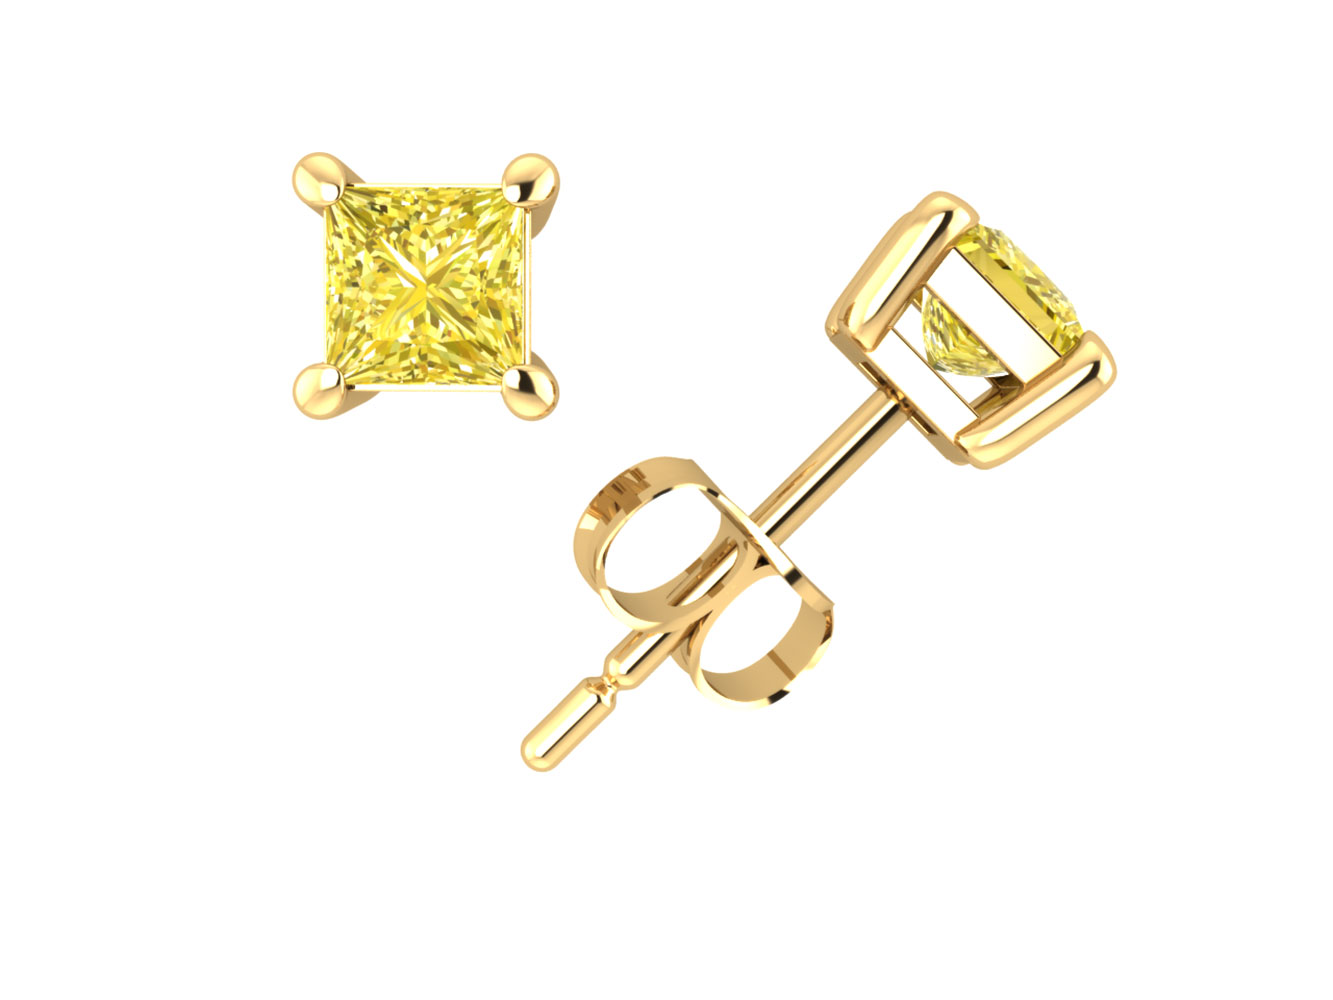 Jewel We Sell 0.40Ctw Princess Cut Yellow Diamond Stud Earrings 14k White or Yellow Gold Prong Setting I2